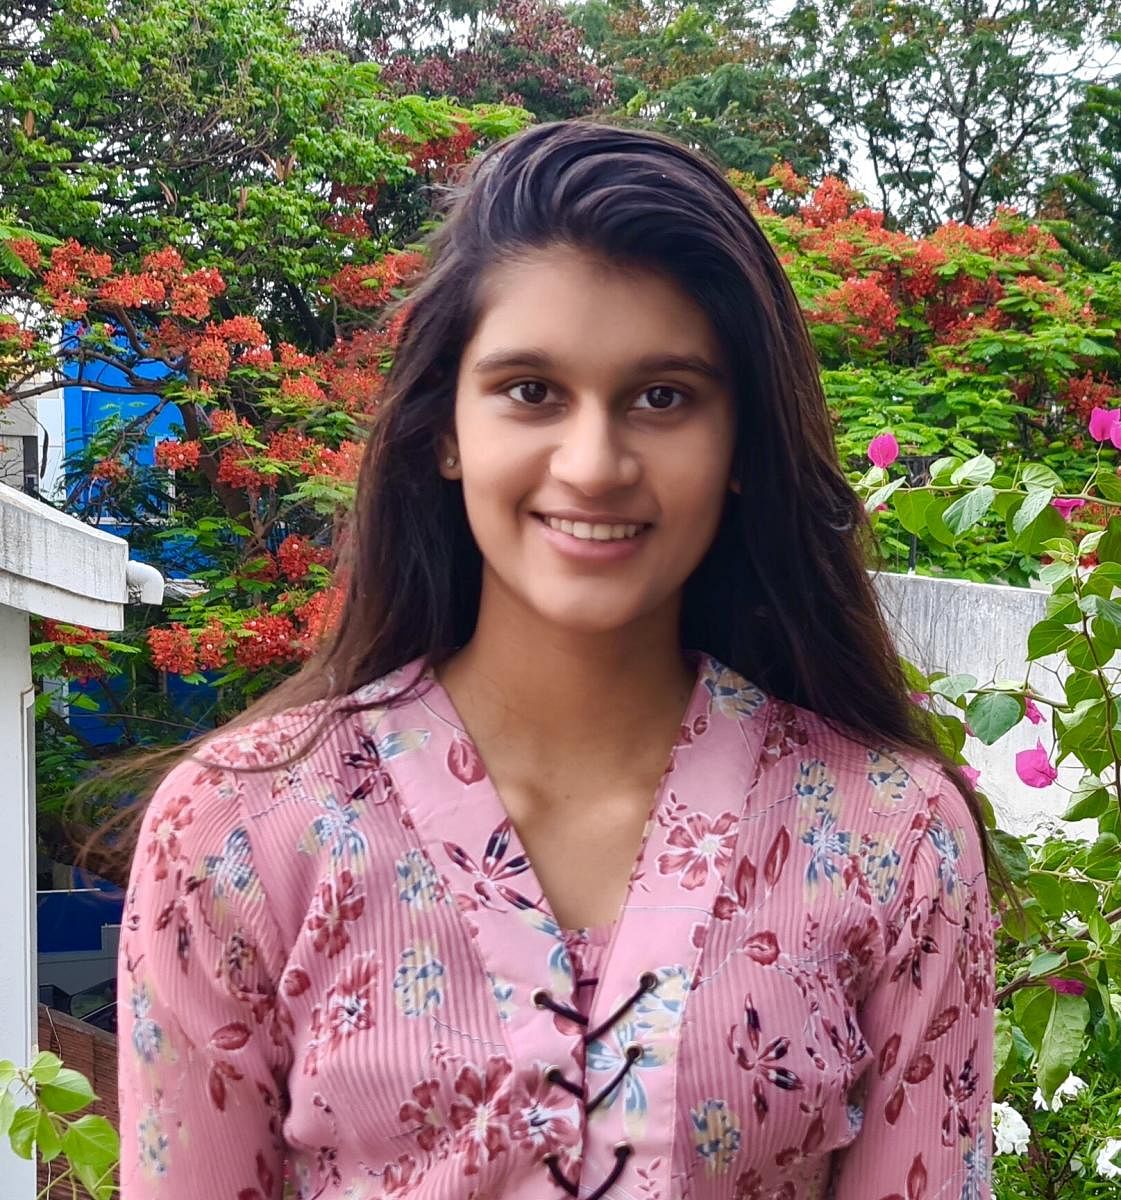 Bengaluru girl wins prestigious award for footwear activism